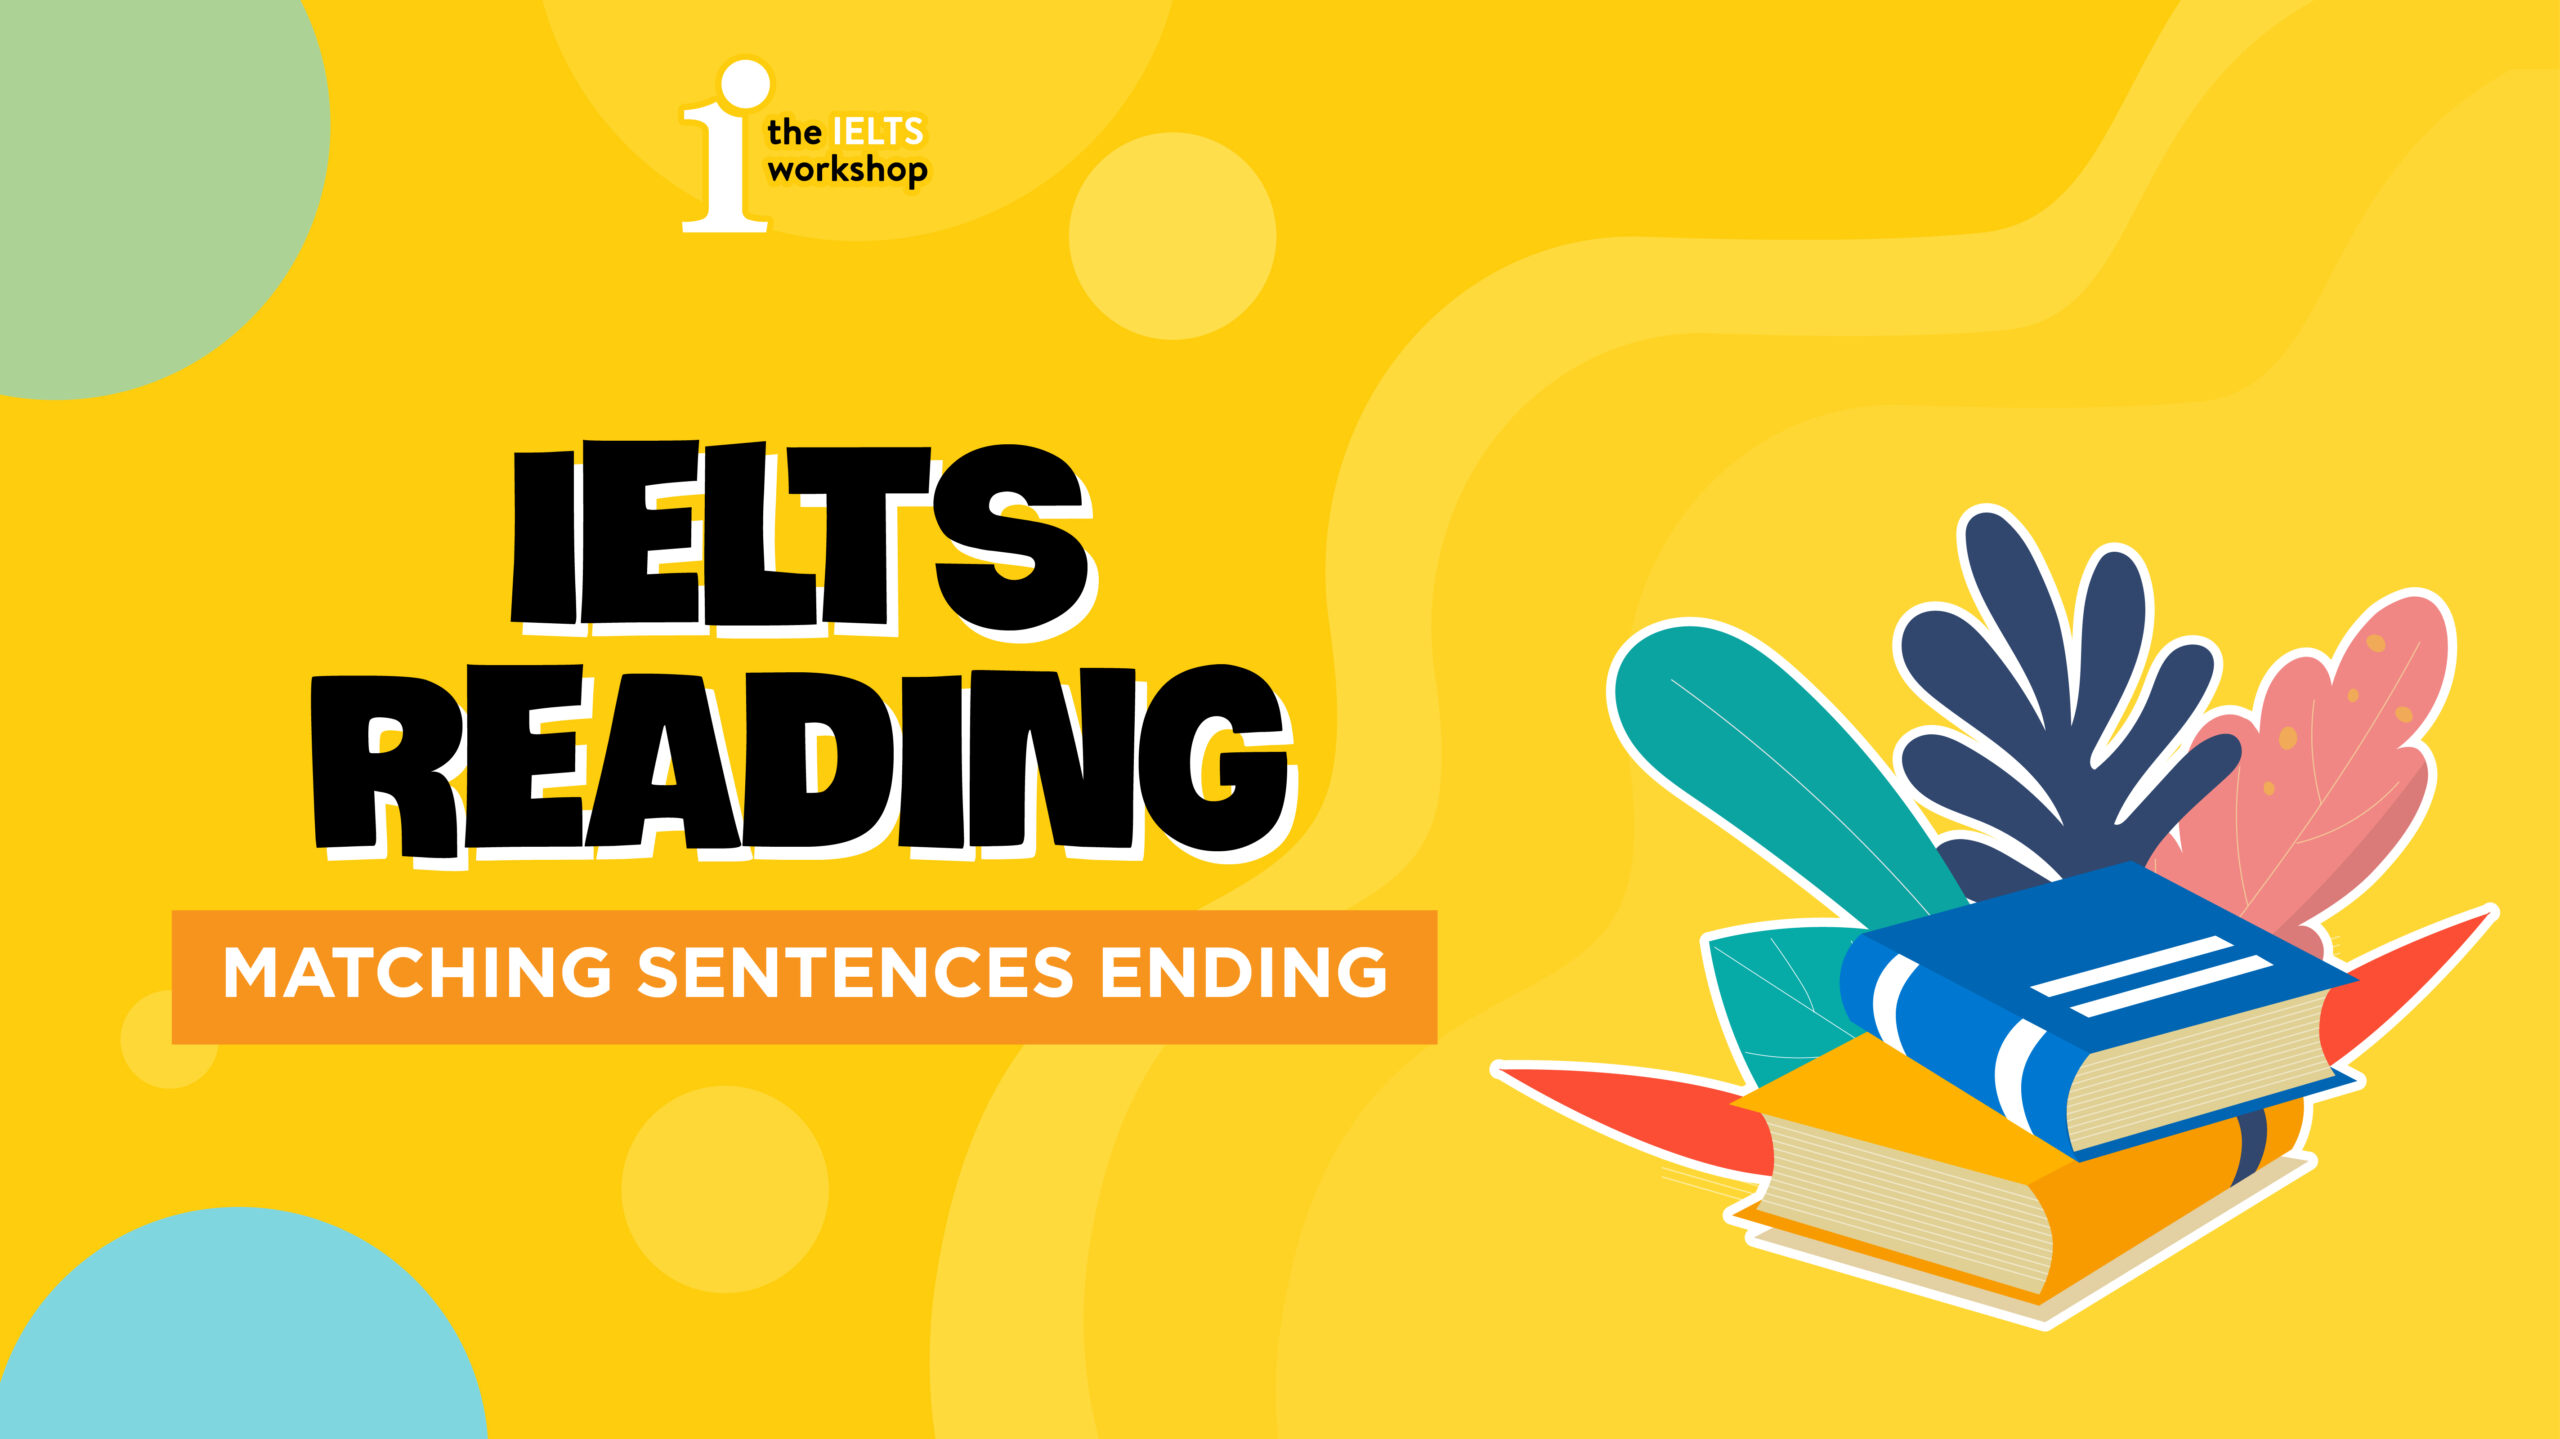 ielts reading matching sentences ending